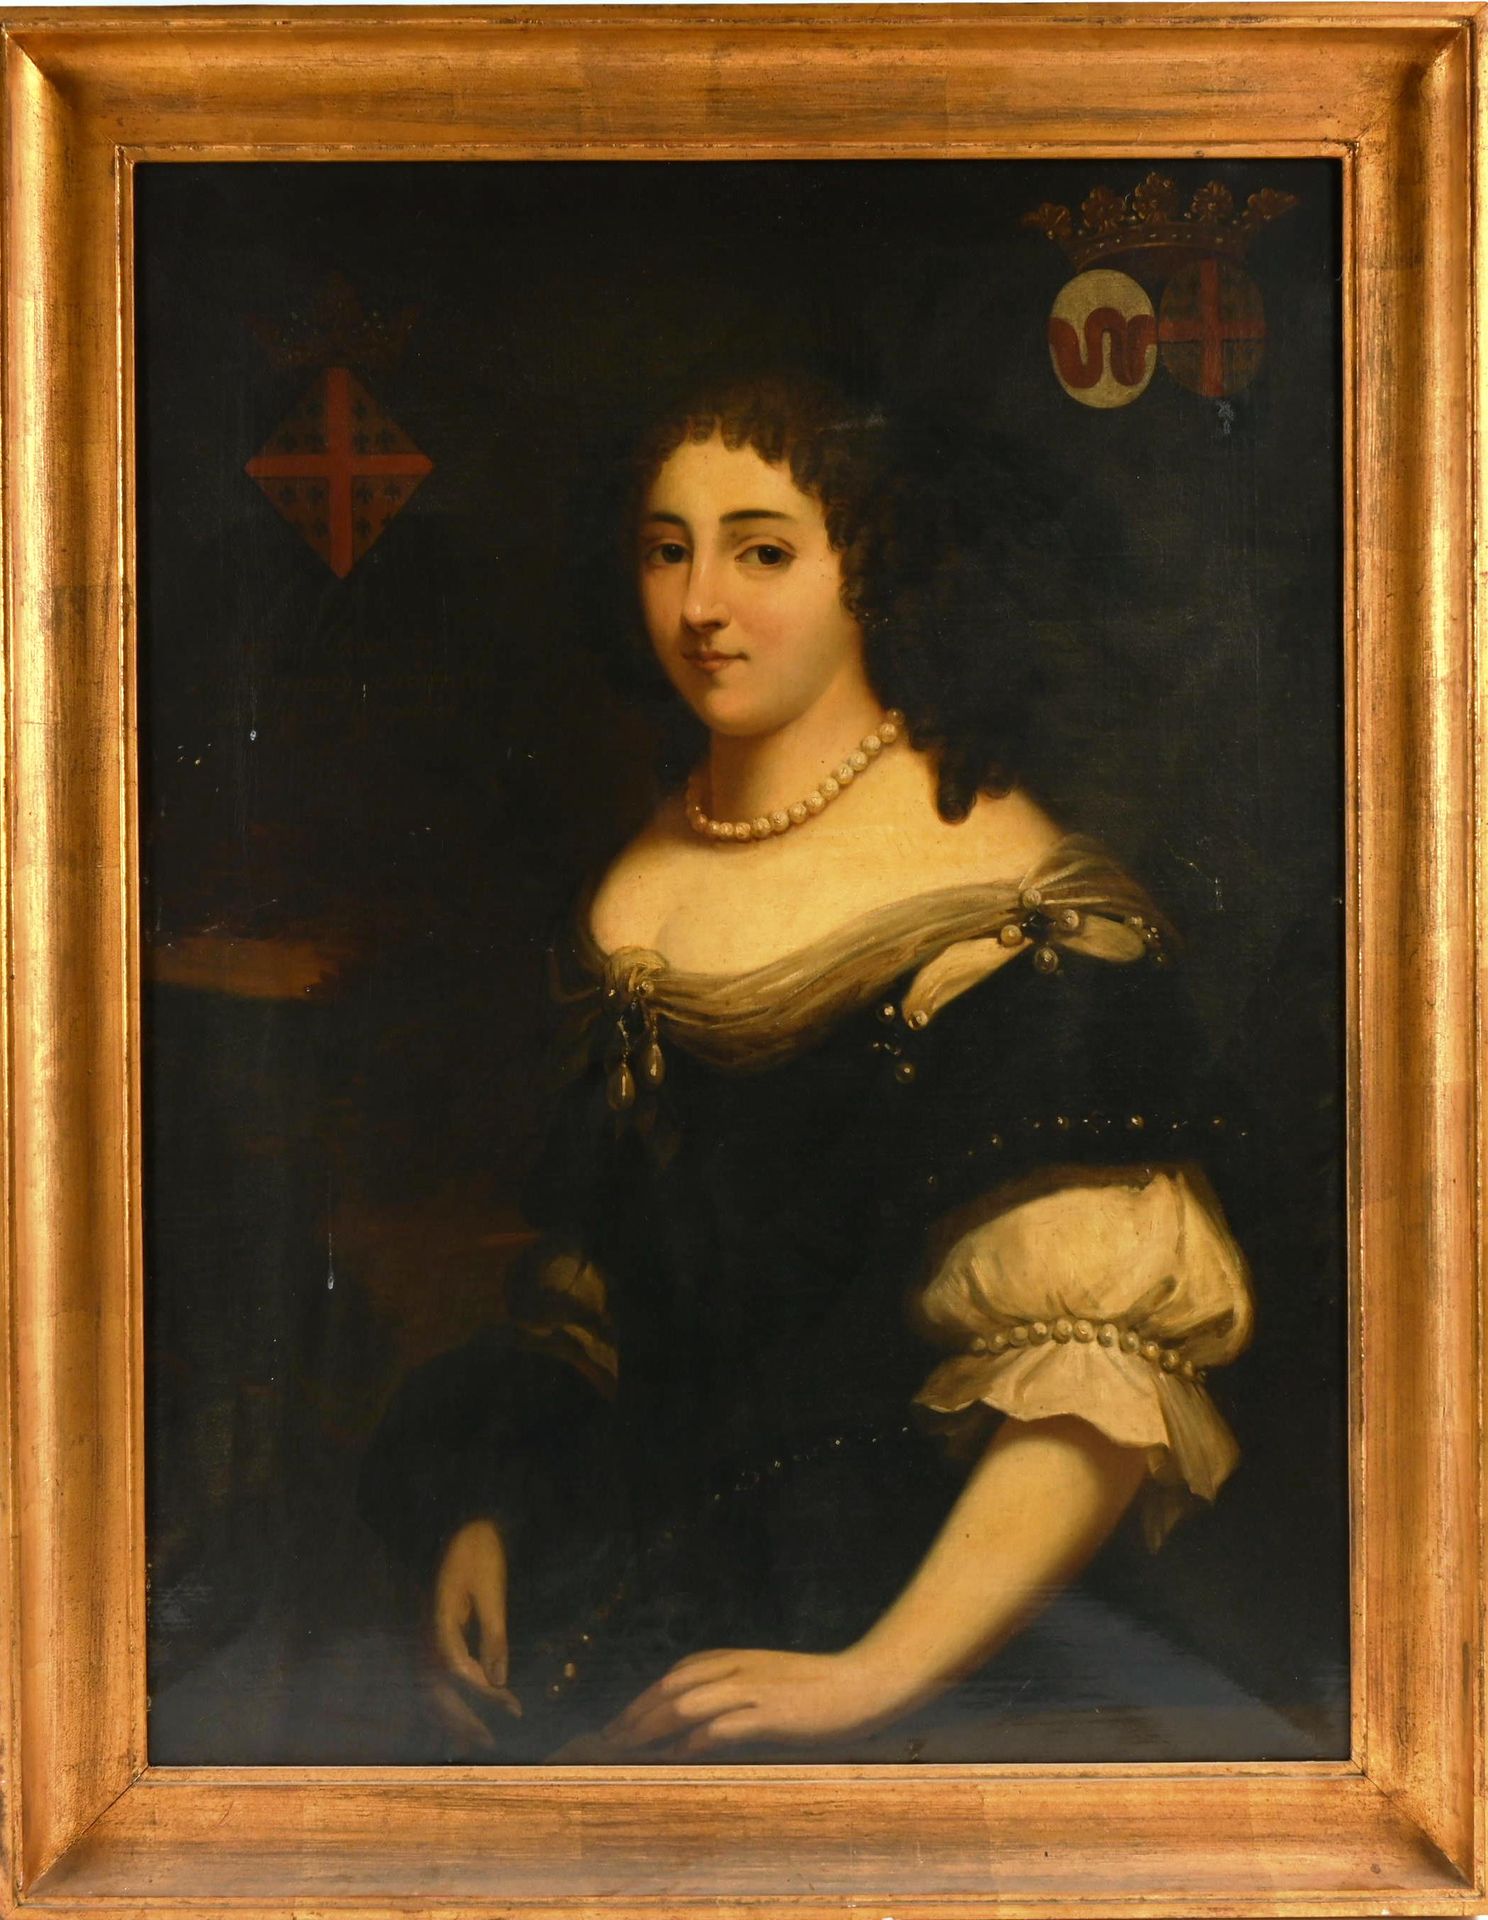 Comtesse de Groesbeek, Portrait. Escuela flamenca de finales del siglo XVII.

"R&hellip;